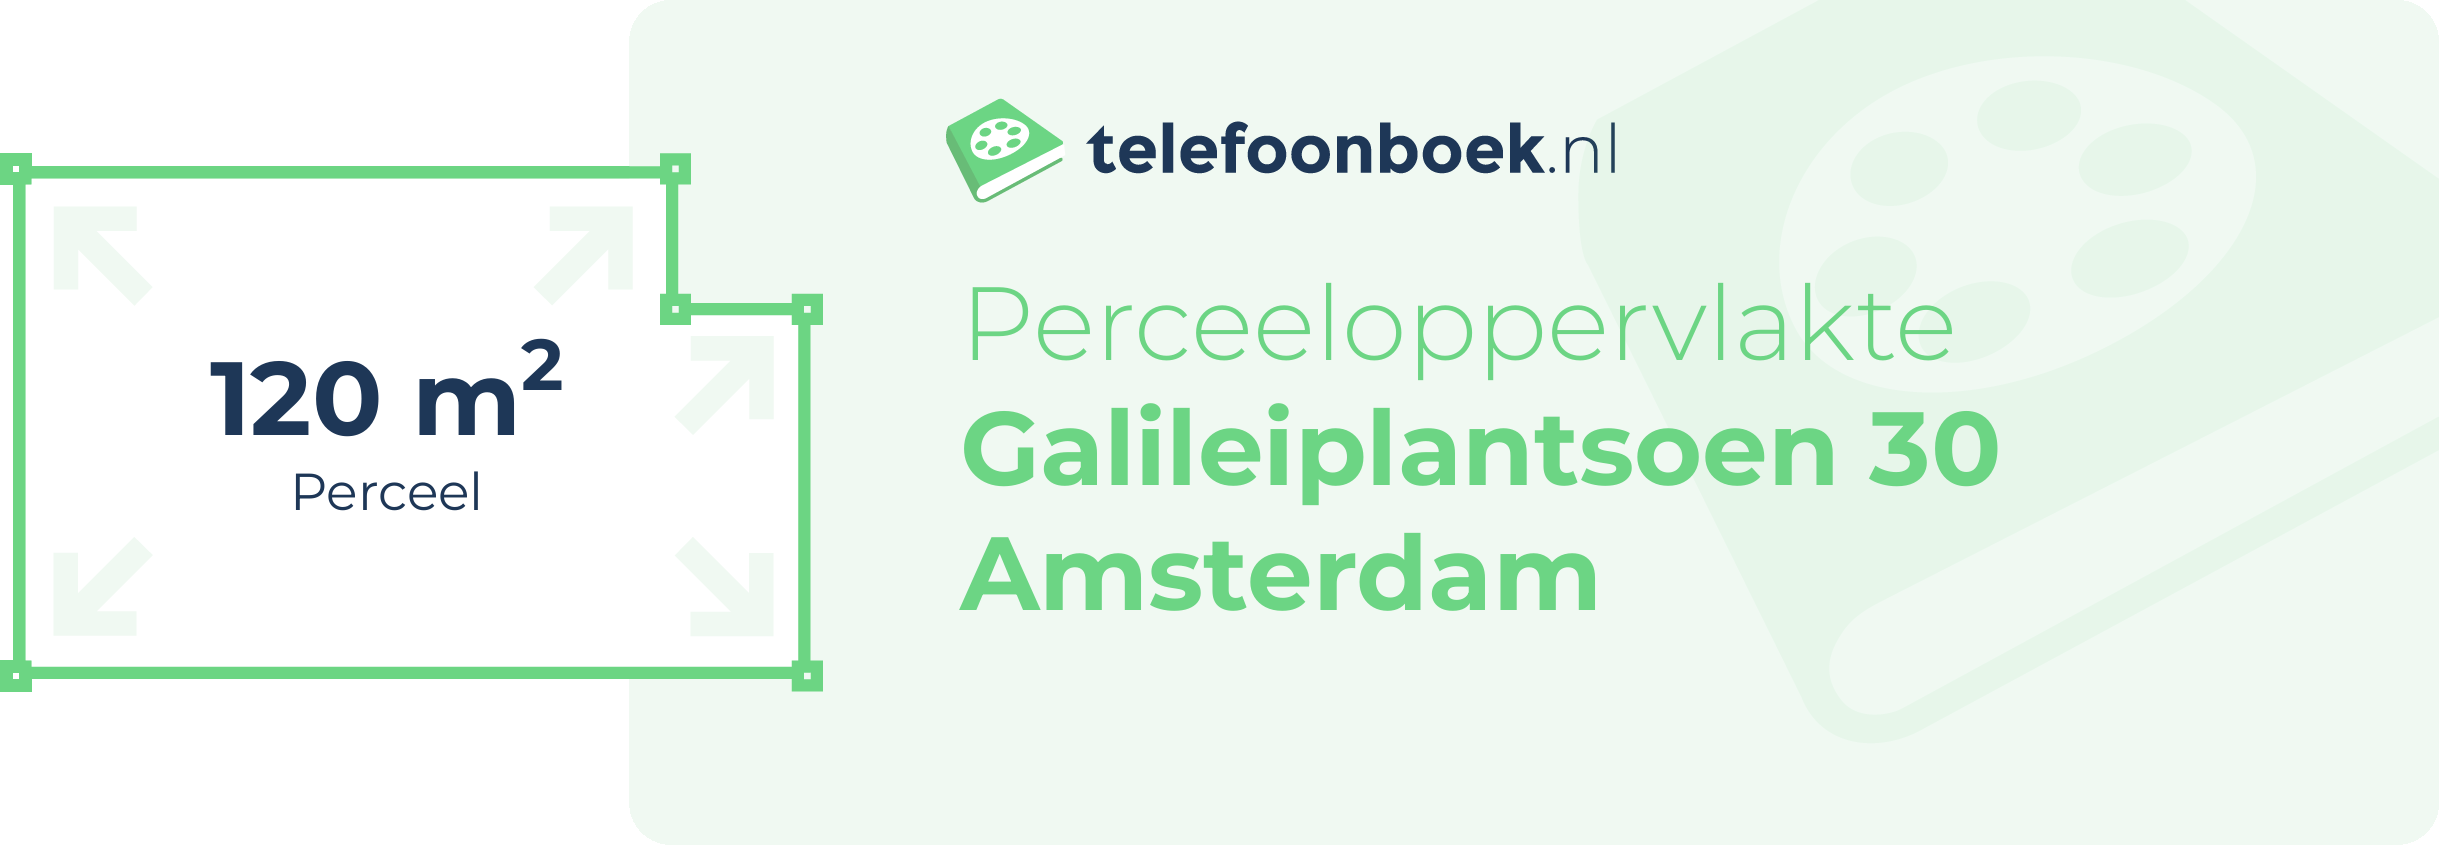 Perceeloppervlakte Galileiplantsoen 30 Amsterdam